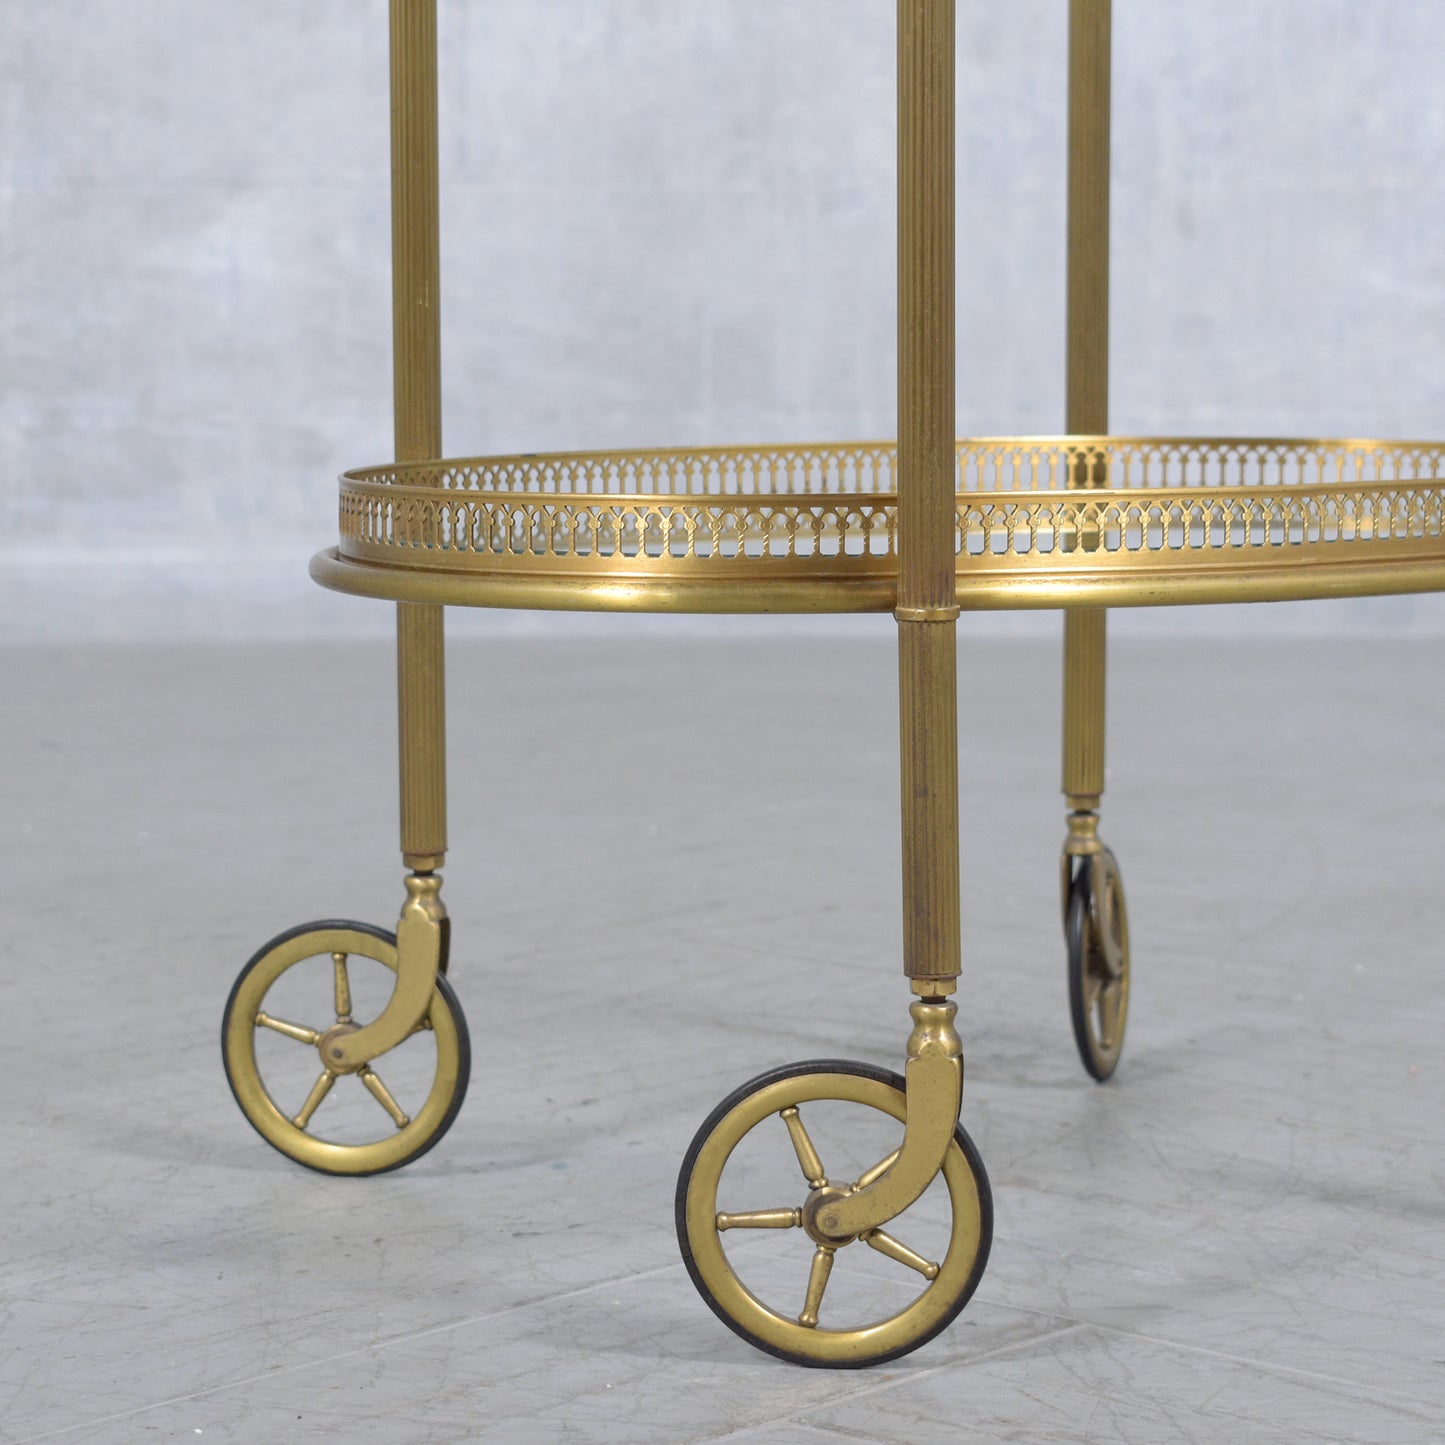 1960s Mid-Century Brass Bar Cart: Vintage Elegance on Wheels